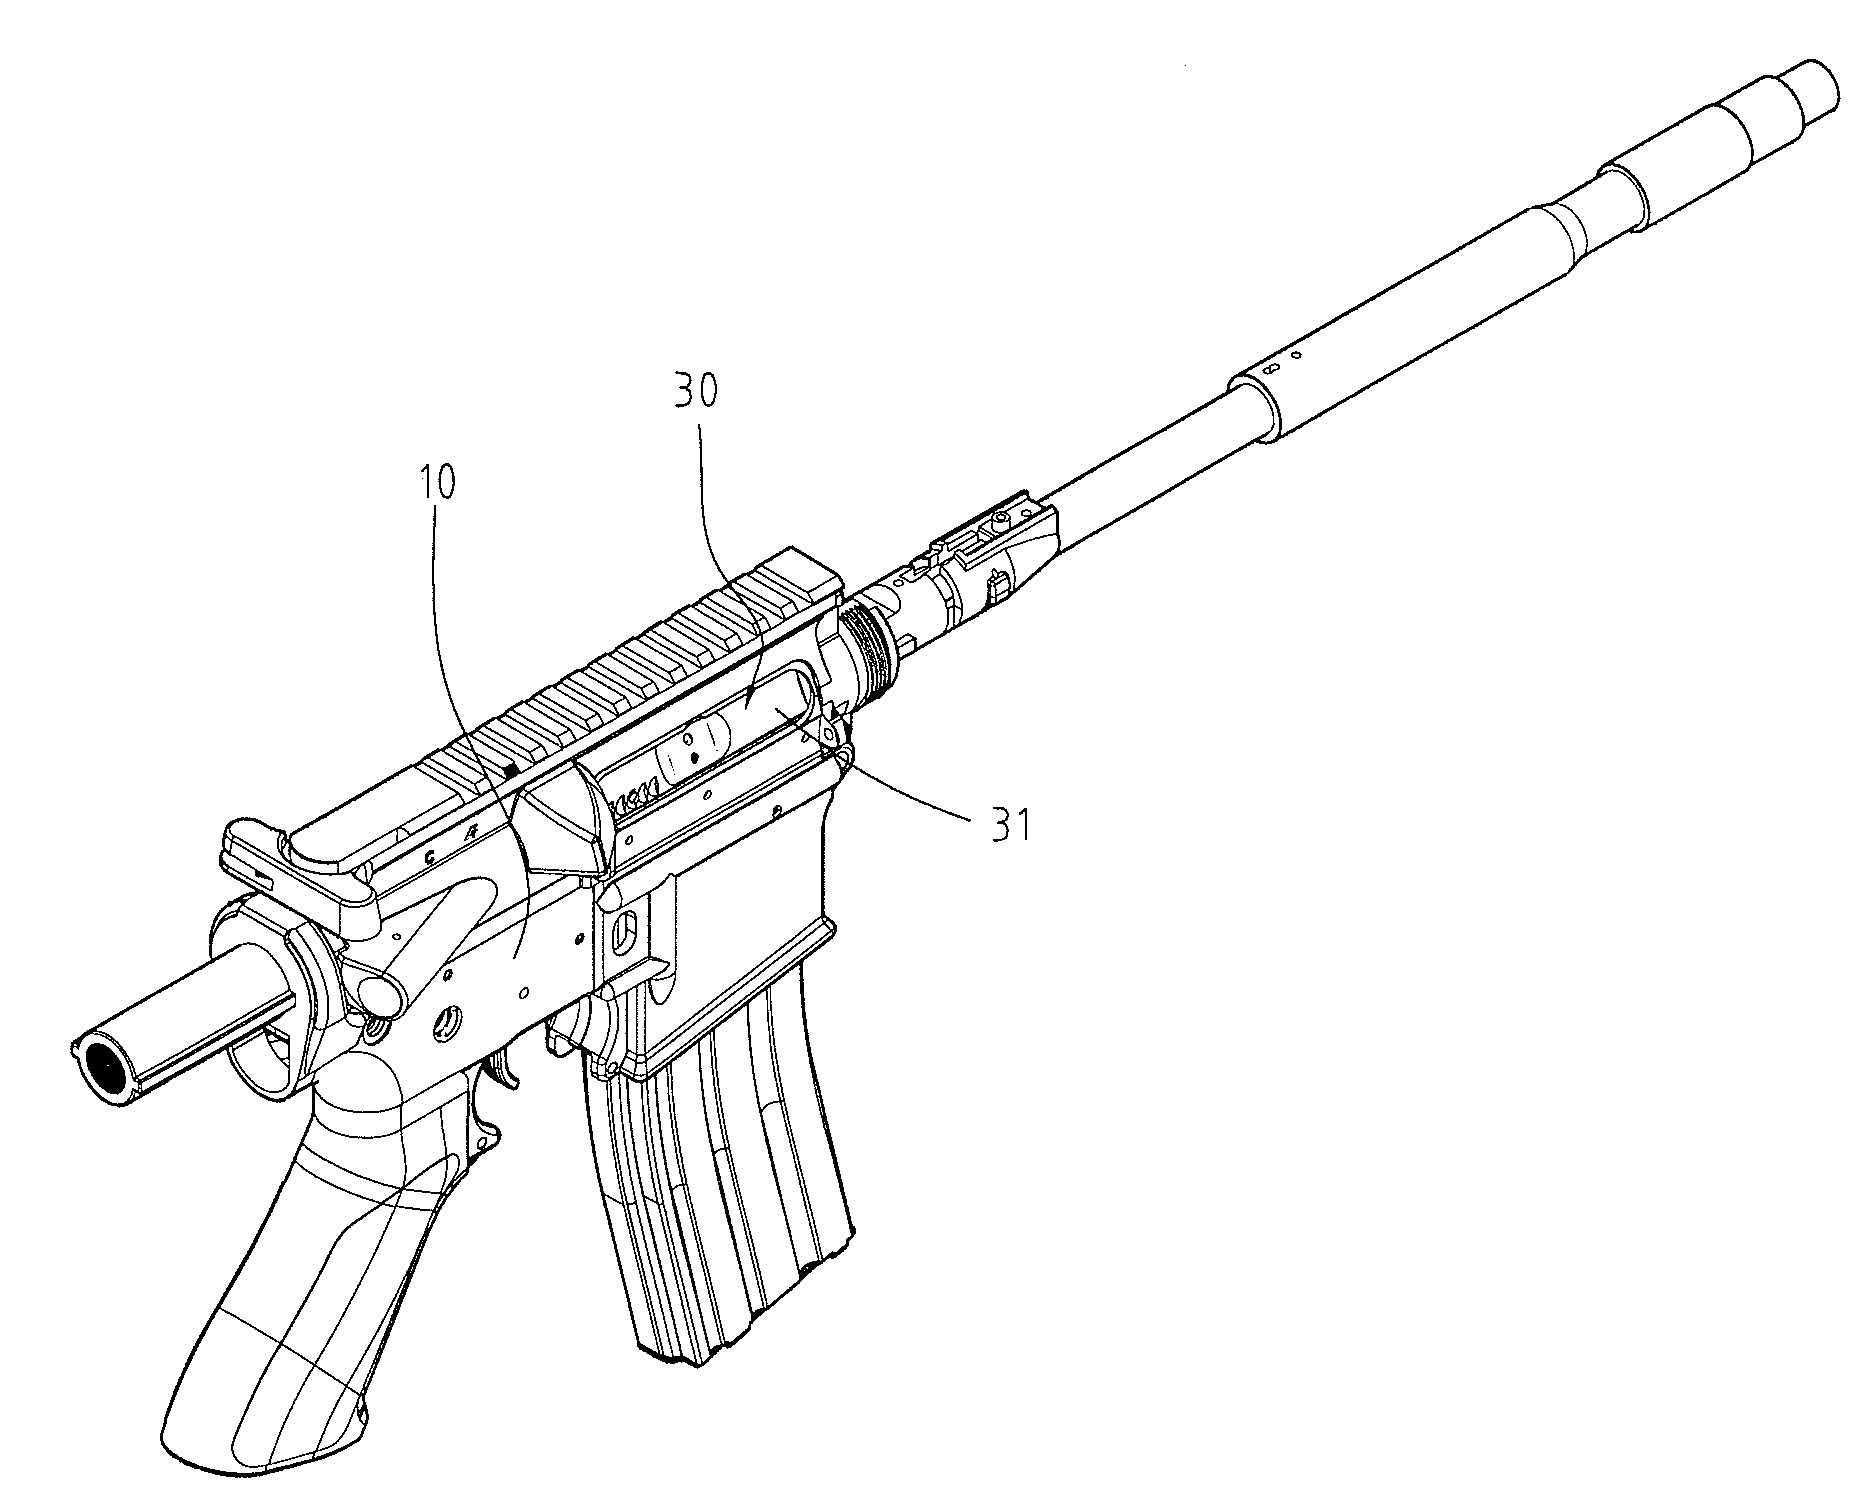 Toy gun mechanism with a sliding bolt assembly